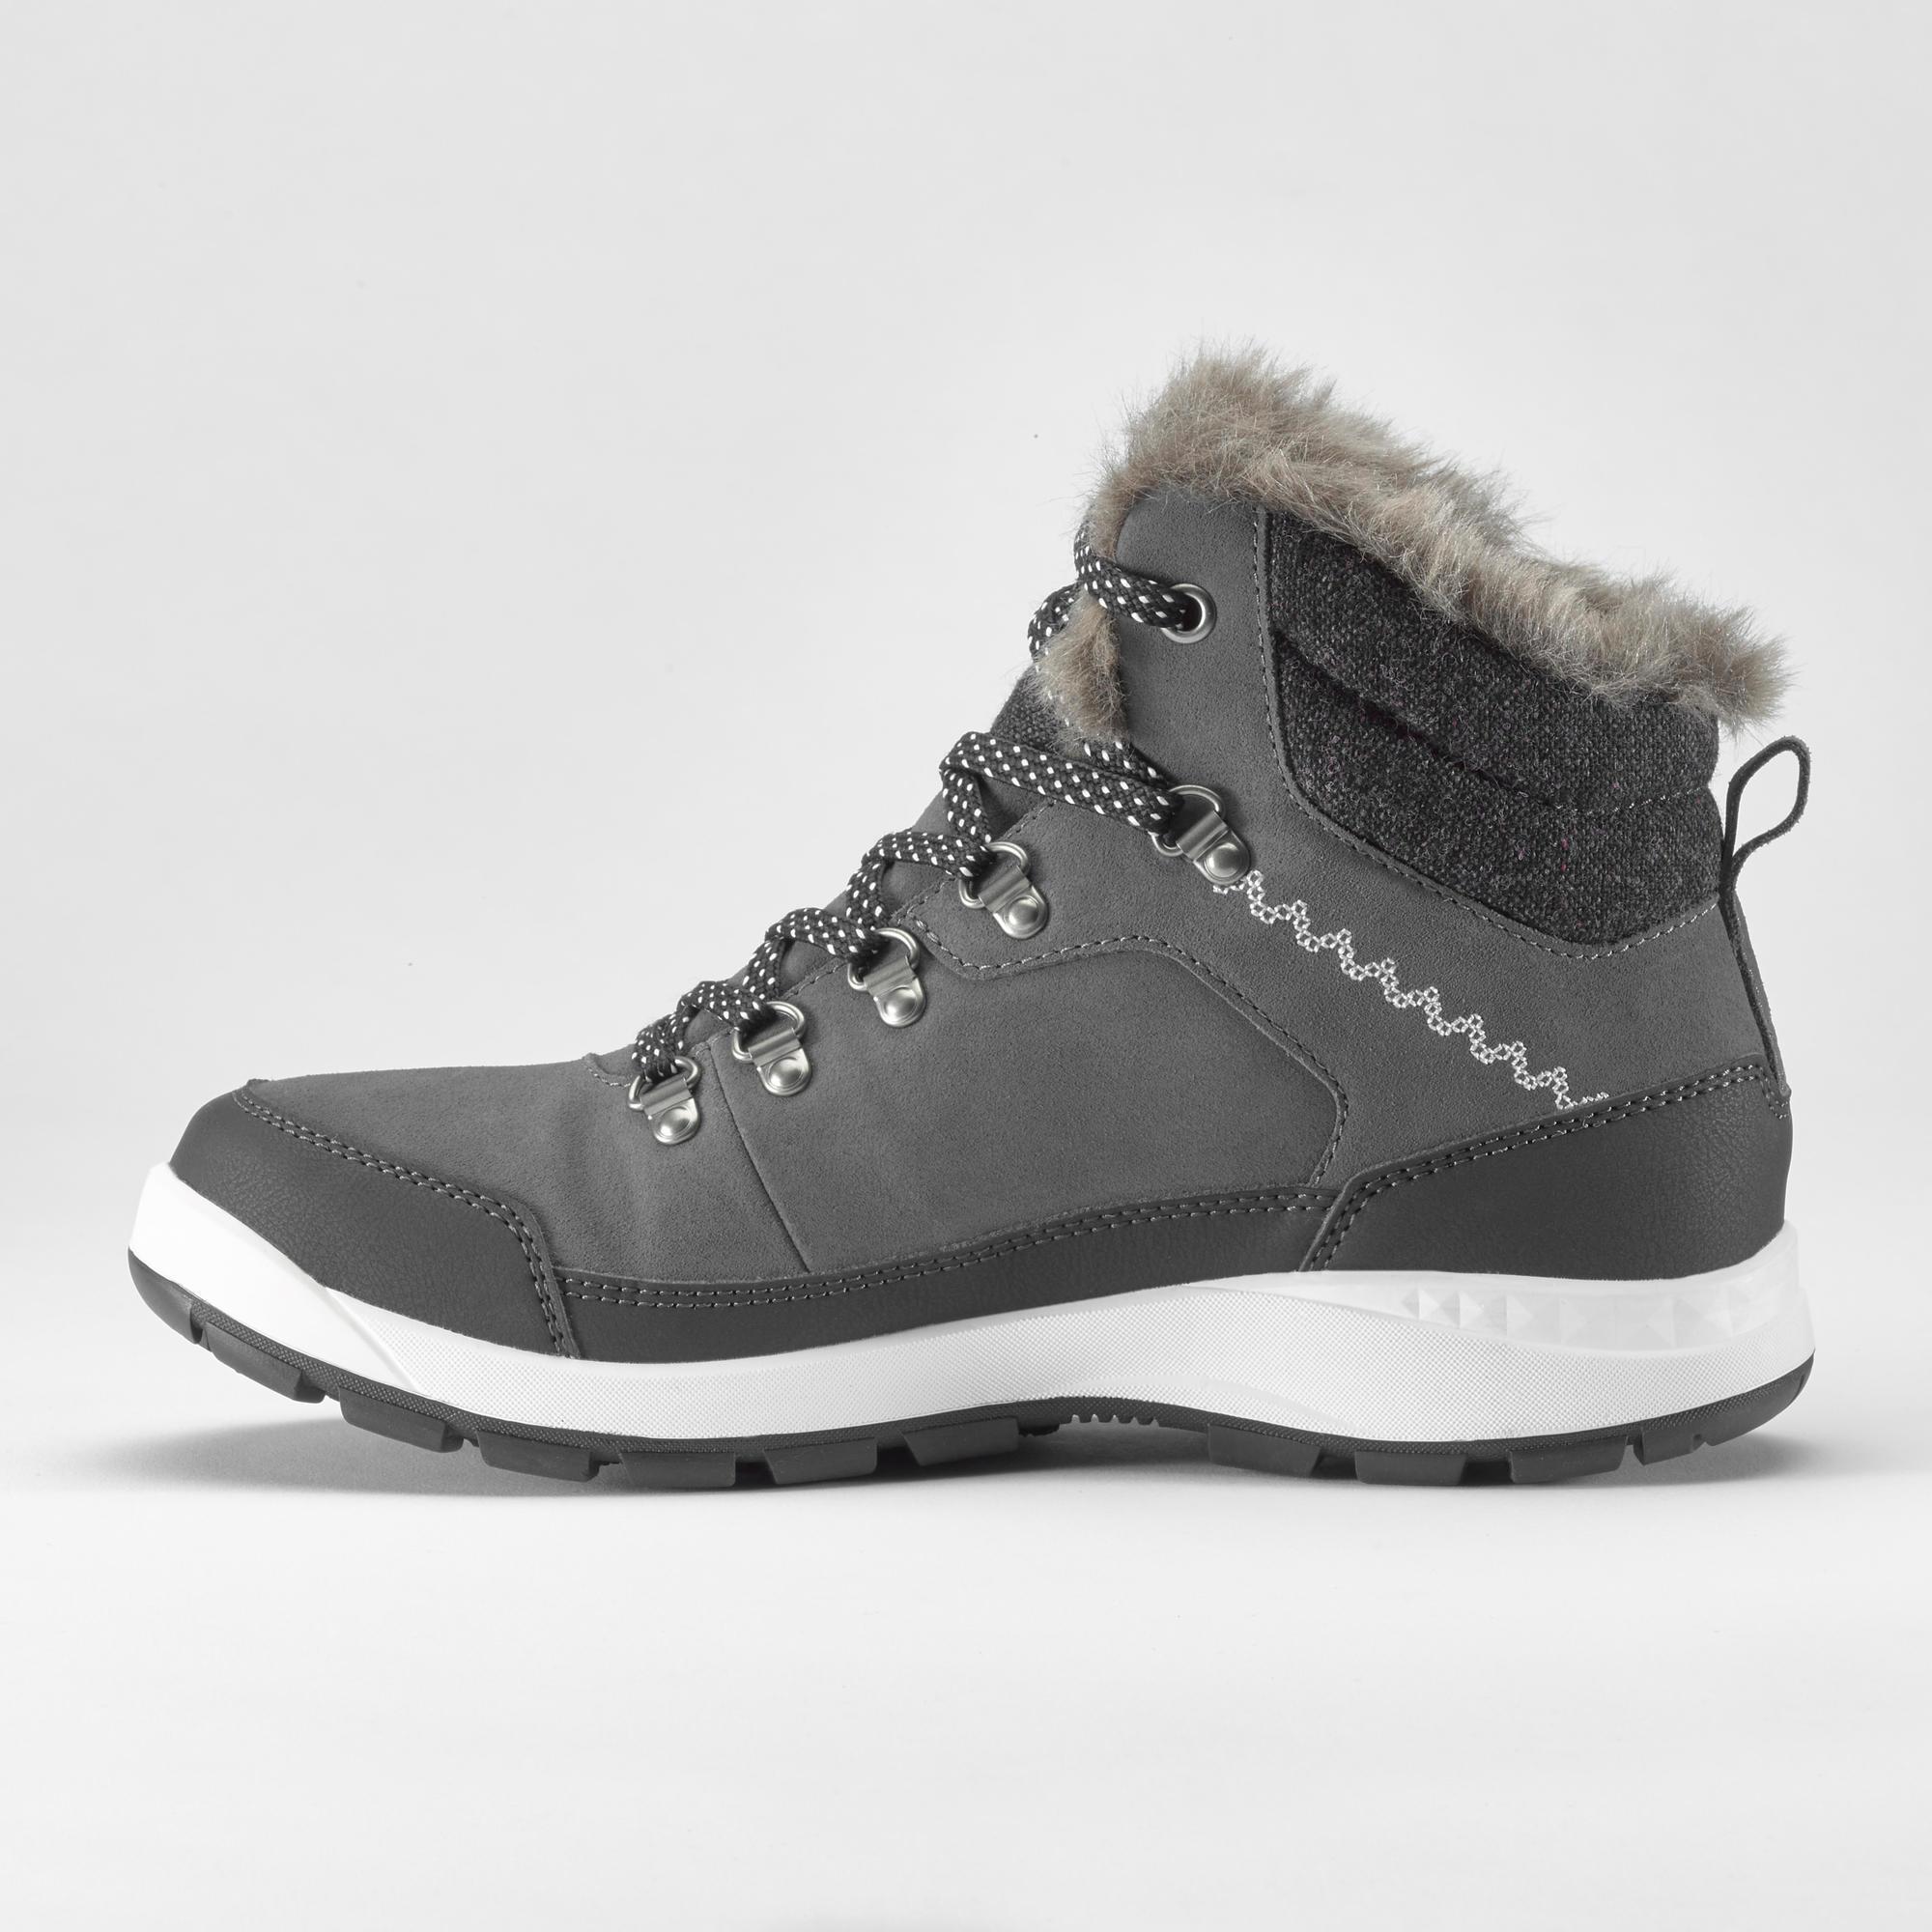 Women’s leather warm waterproof snow boots - SH900 Mid 3/7